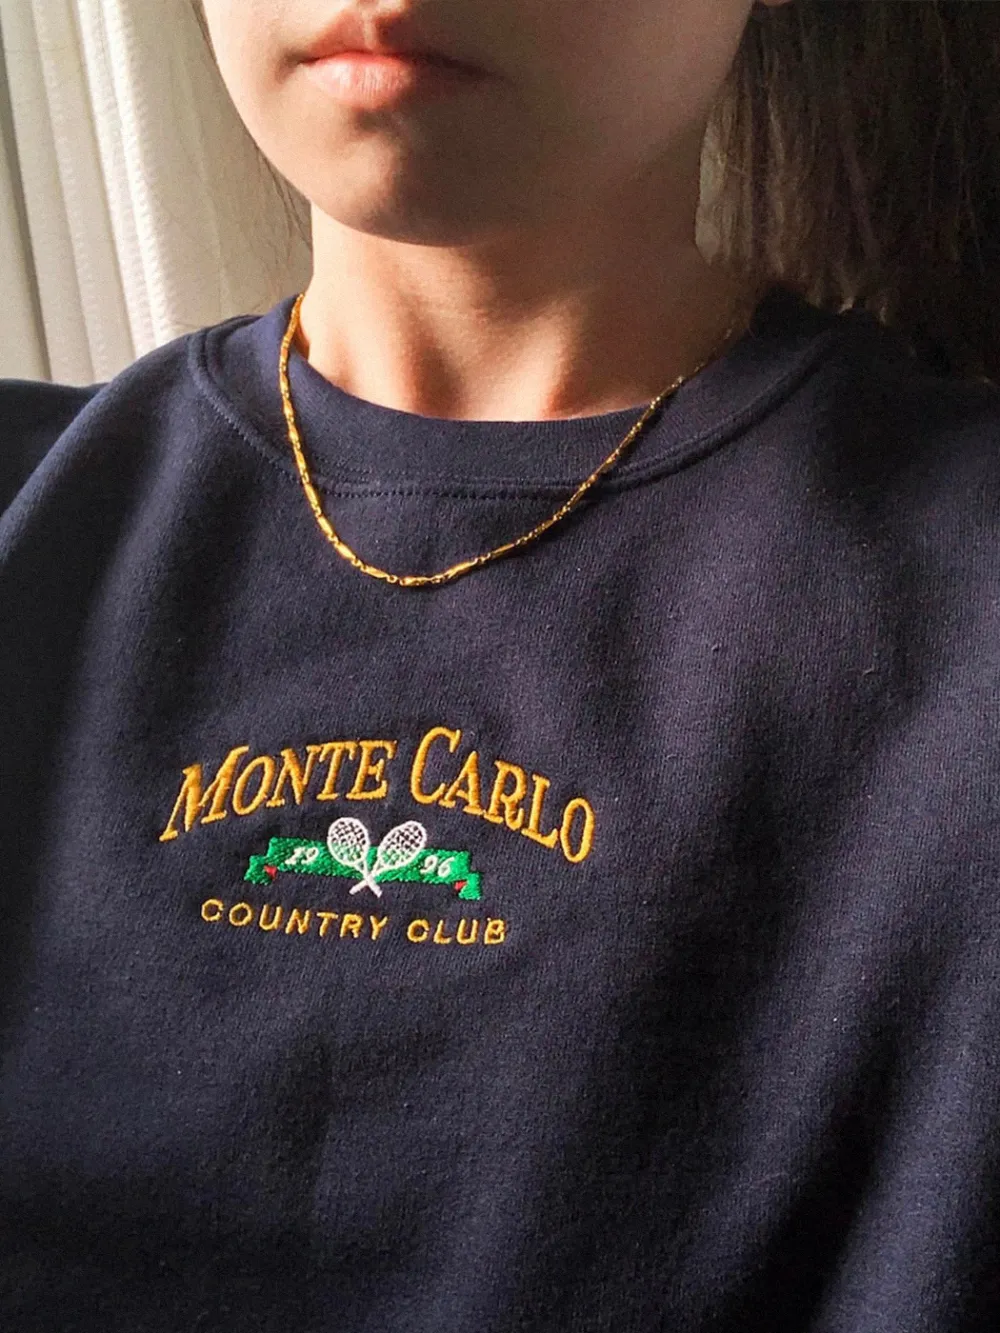 Monte Carlo Vintage Sweatshirt, Embroidered Tennis Crewneck, Monaco Sweater